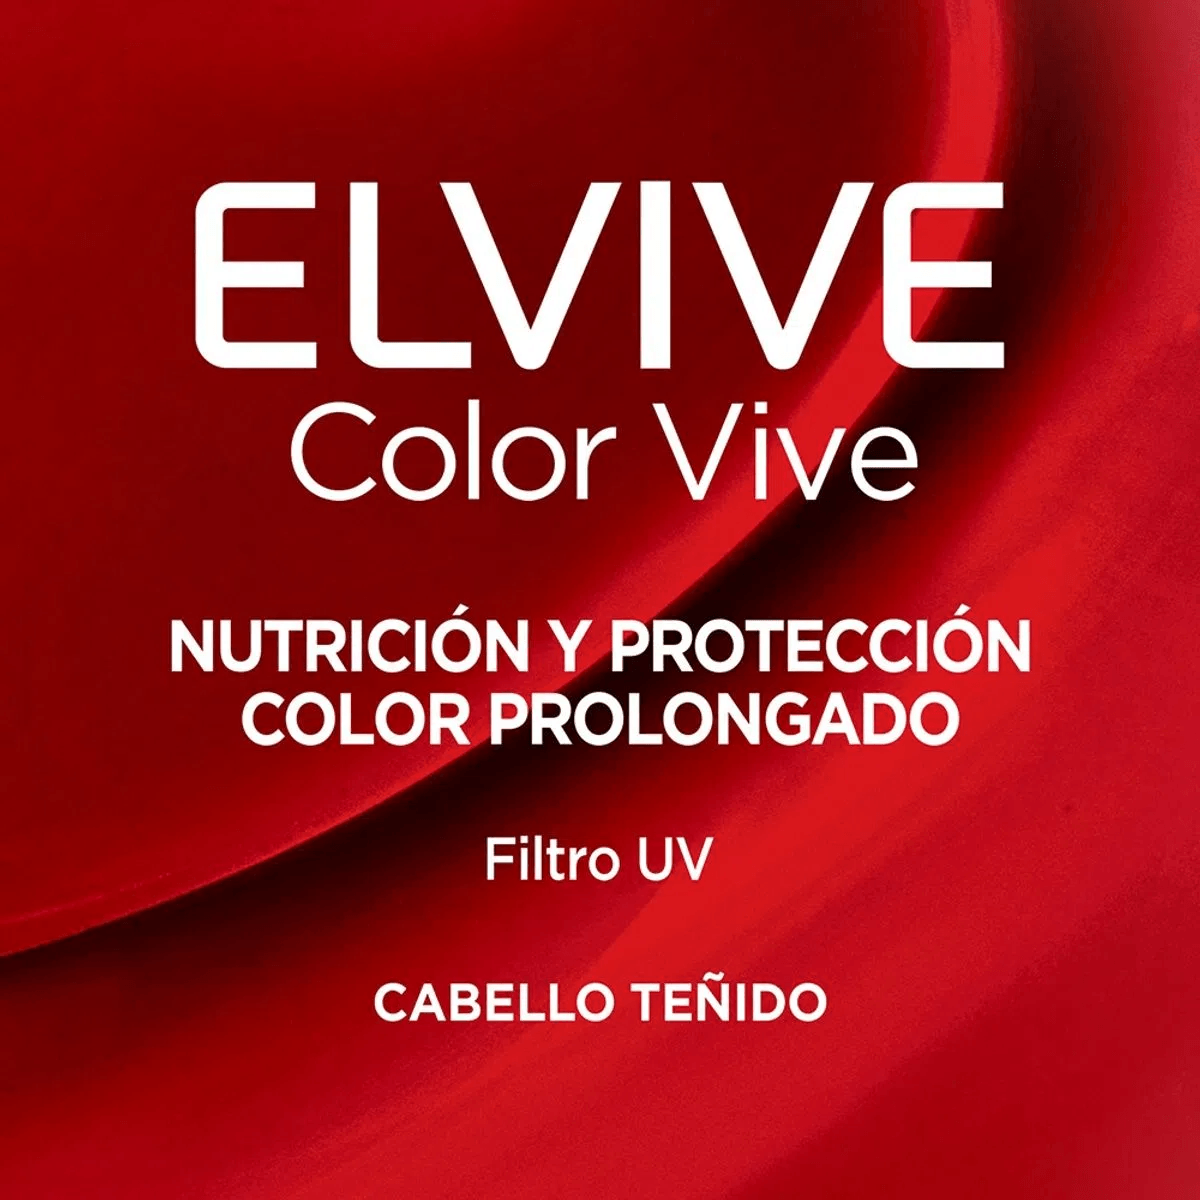 Champu Elvive Color Vive 370 ml.